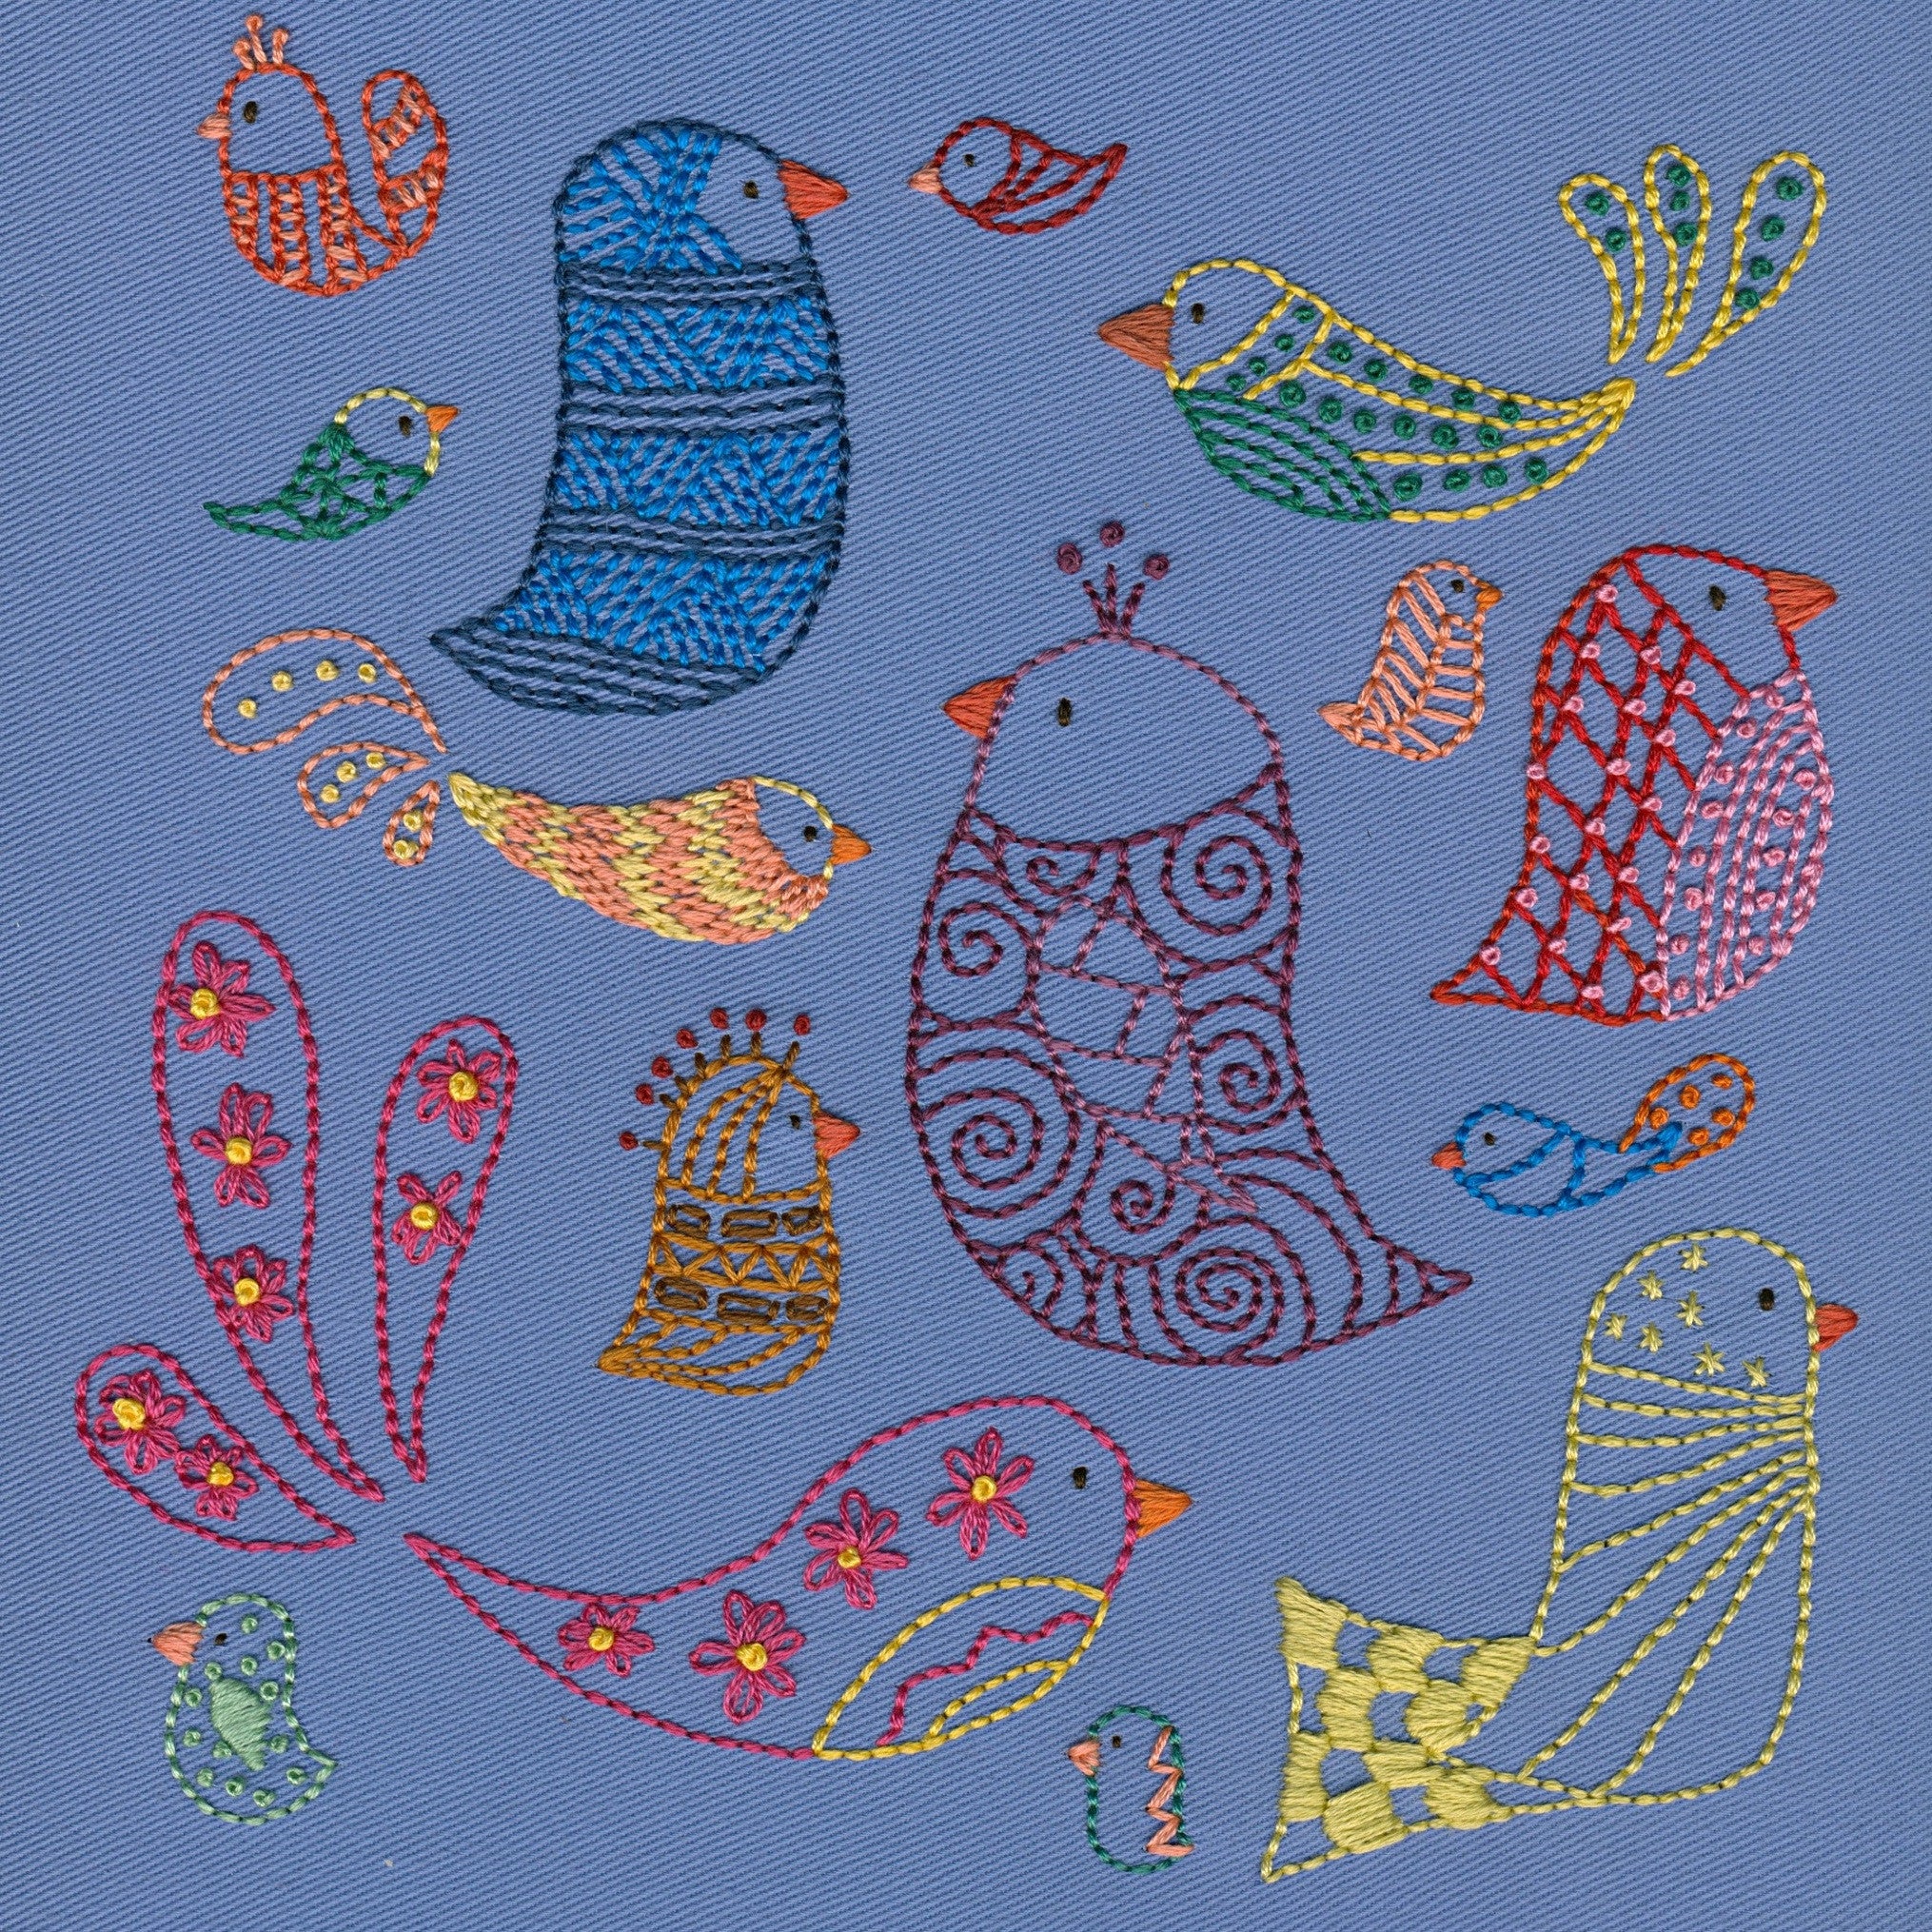 Birds embroidery pattern